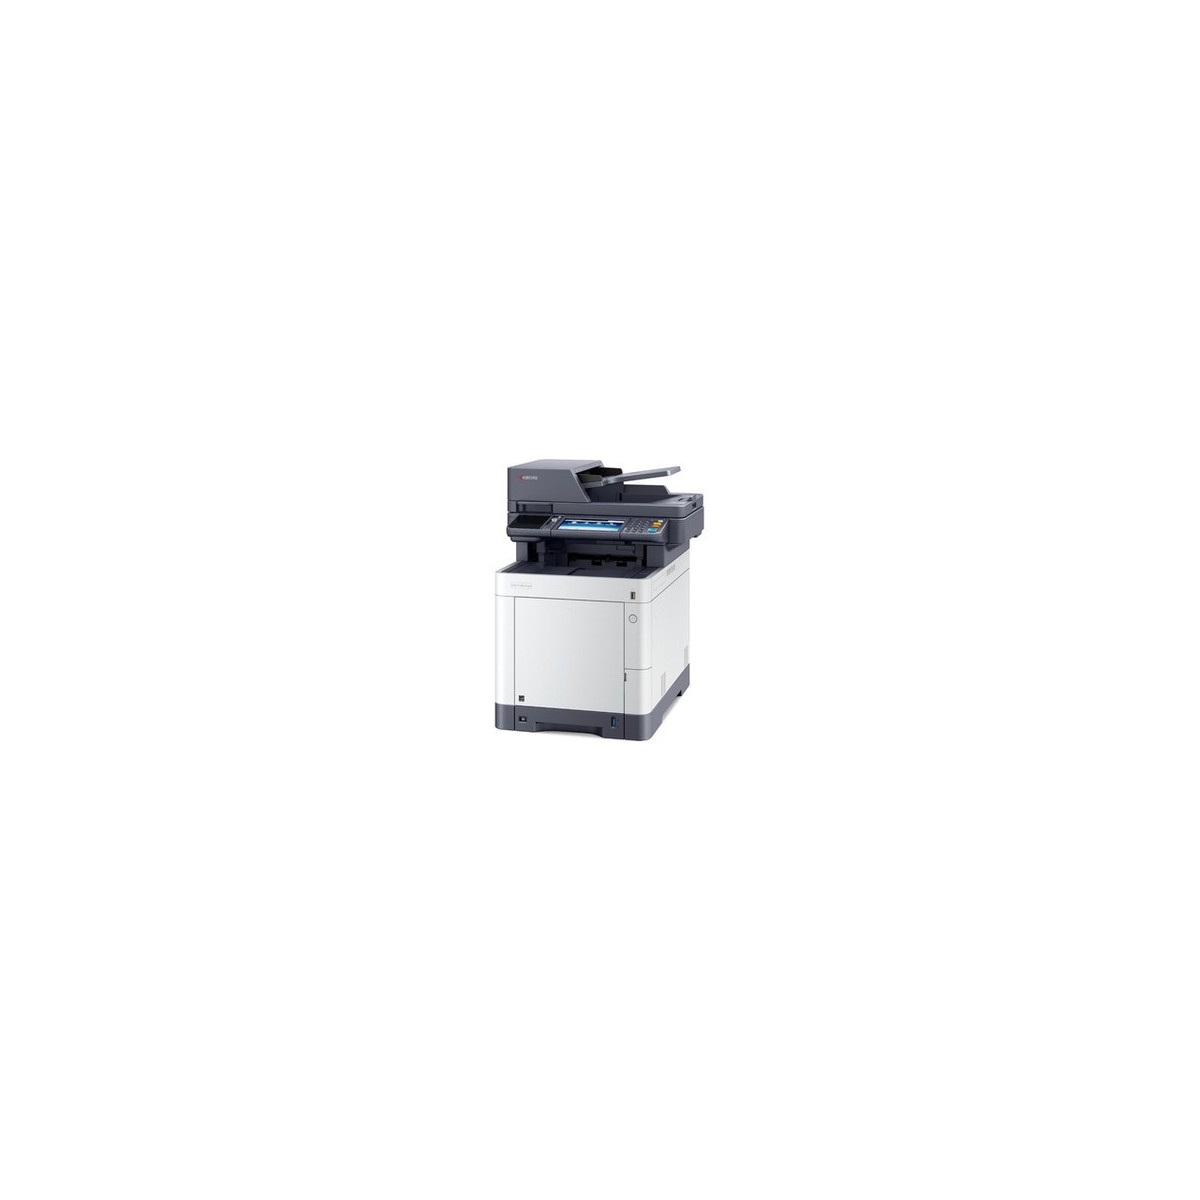 Kyocera ECOSYS M6235cidn - Multifunction printer